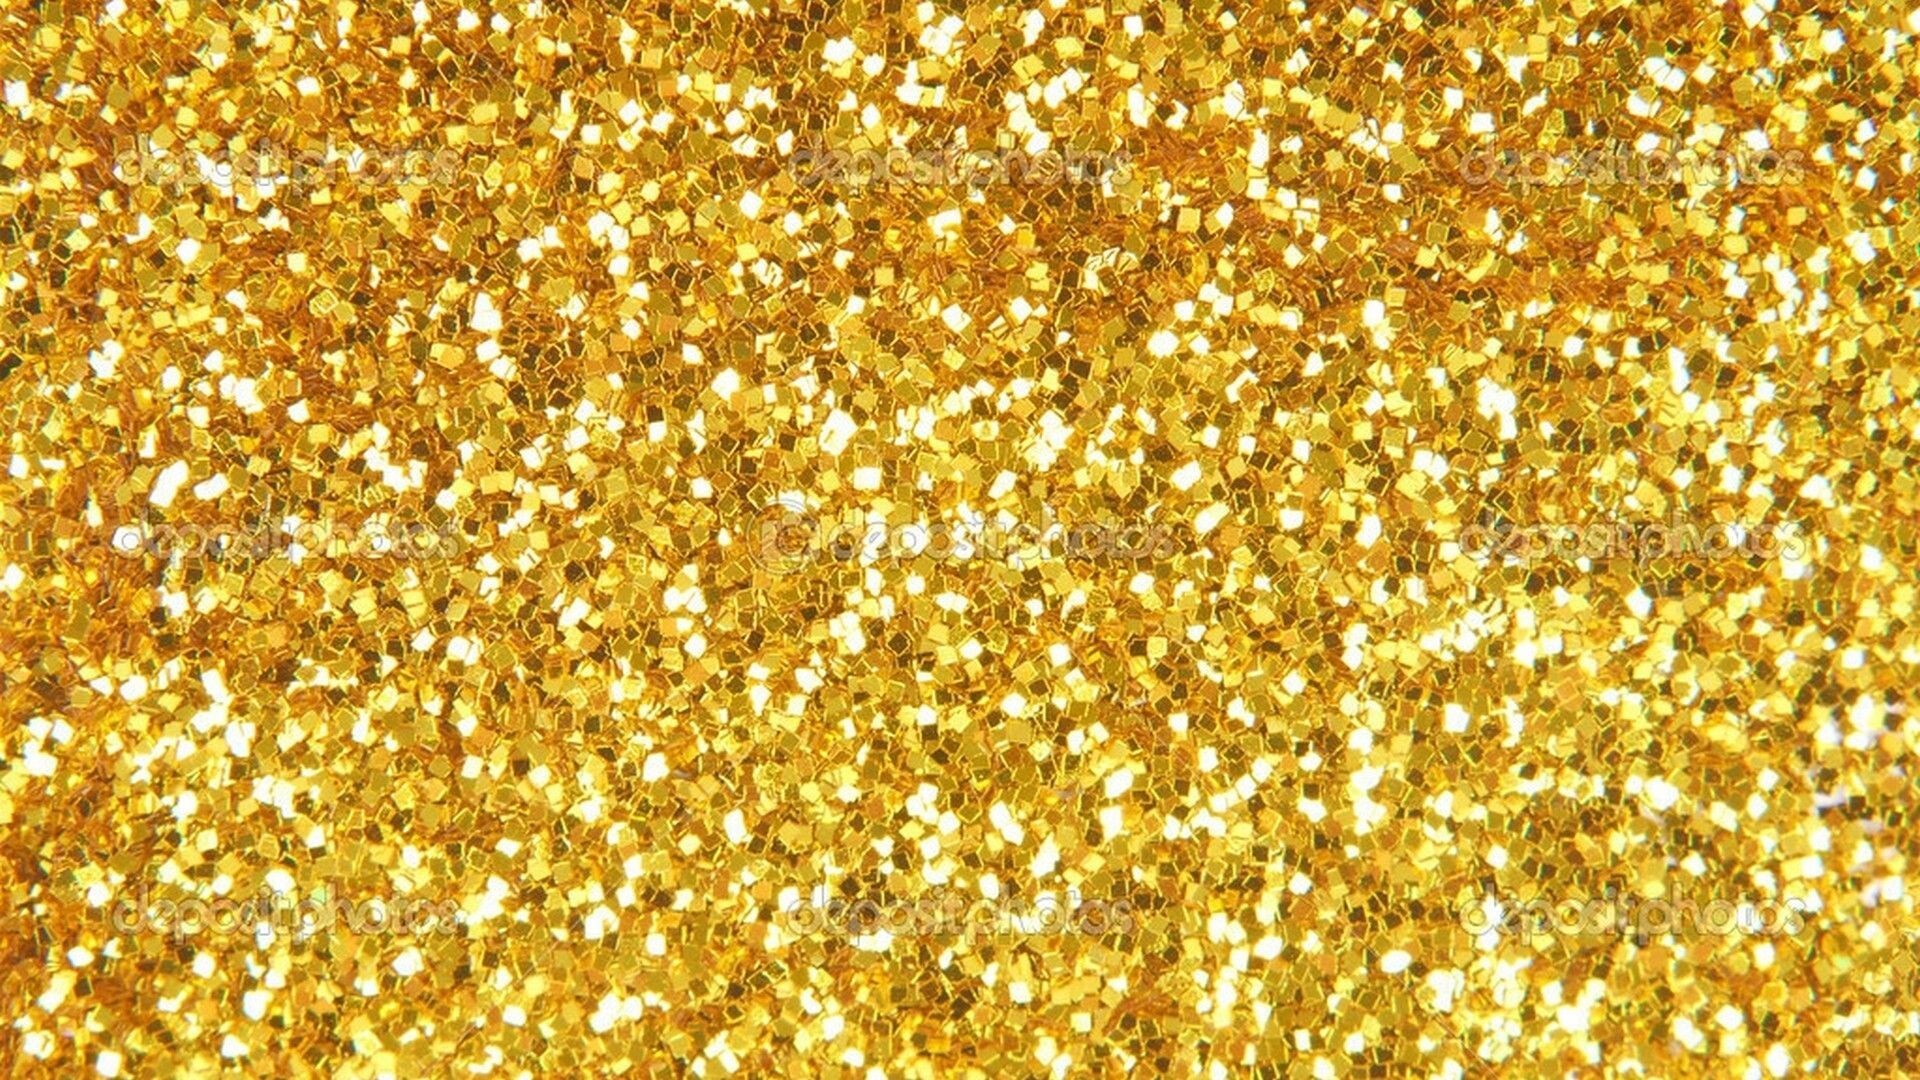 Gold Dots: Gold glitter, Metallic polyester plastic films, Small golden pieces of uniform shape. 1920x1080 Full HD Wallpaper.